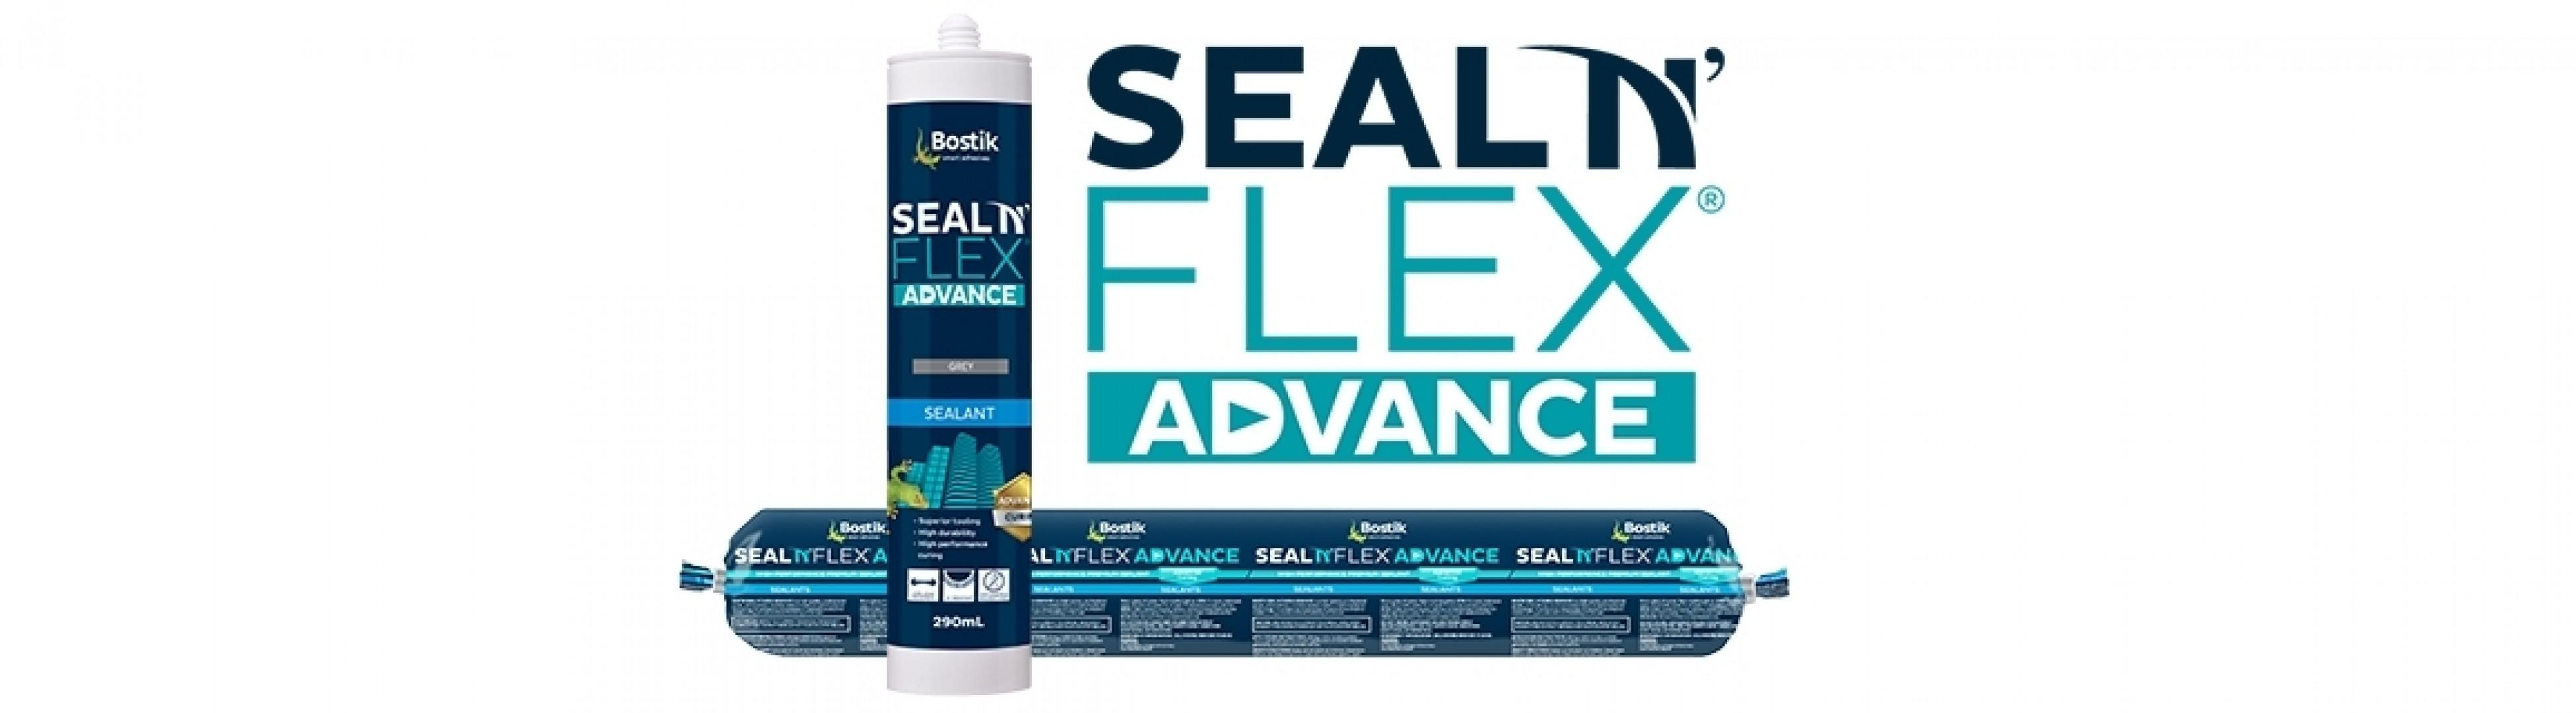 Seal 'N' Flex Advance from Bostik